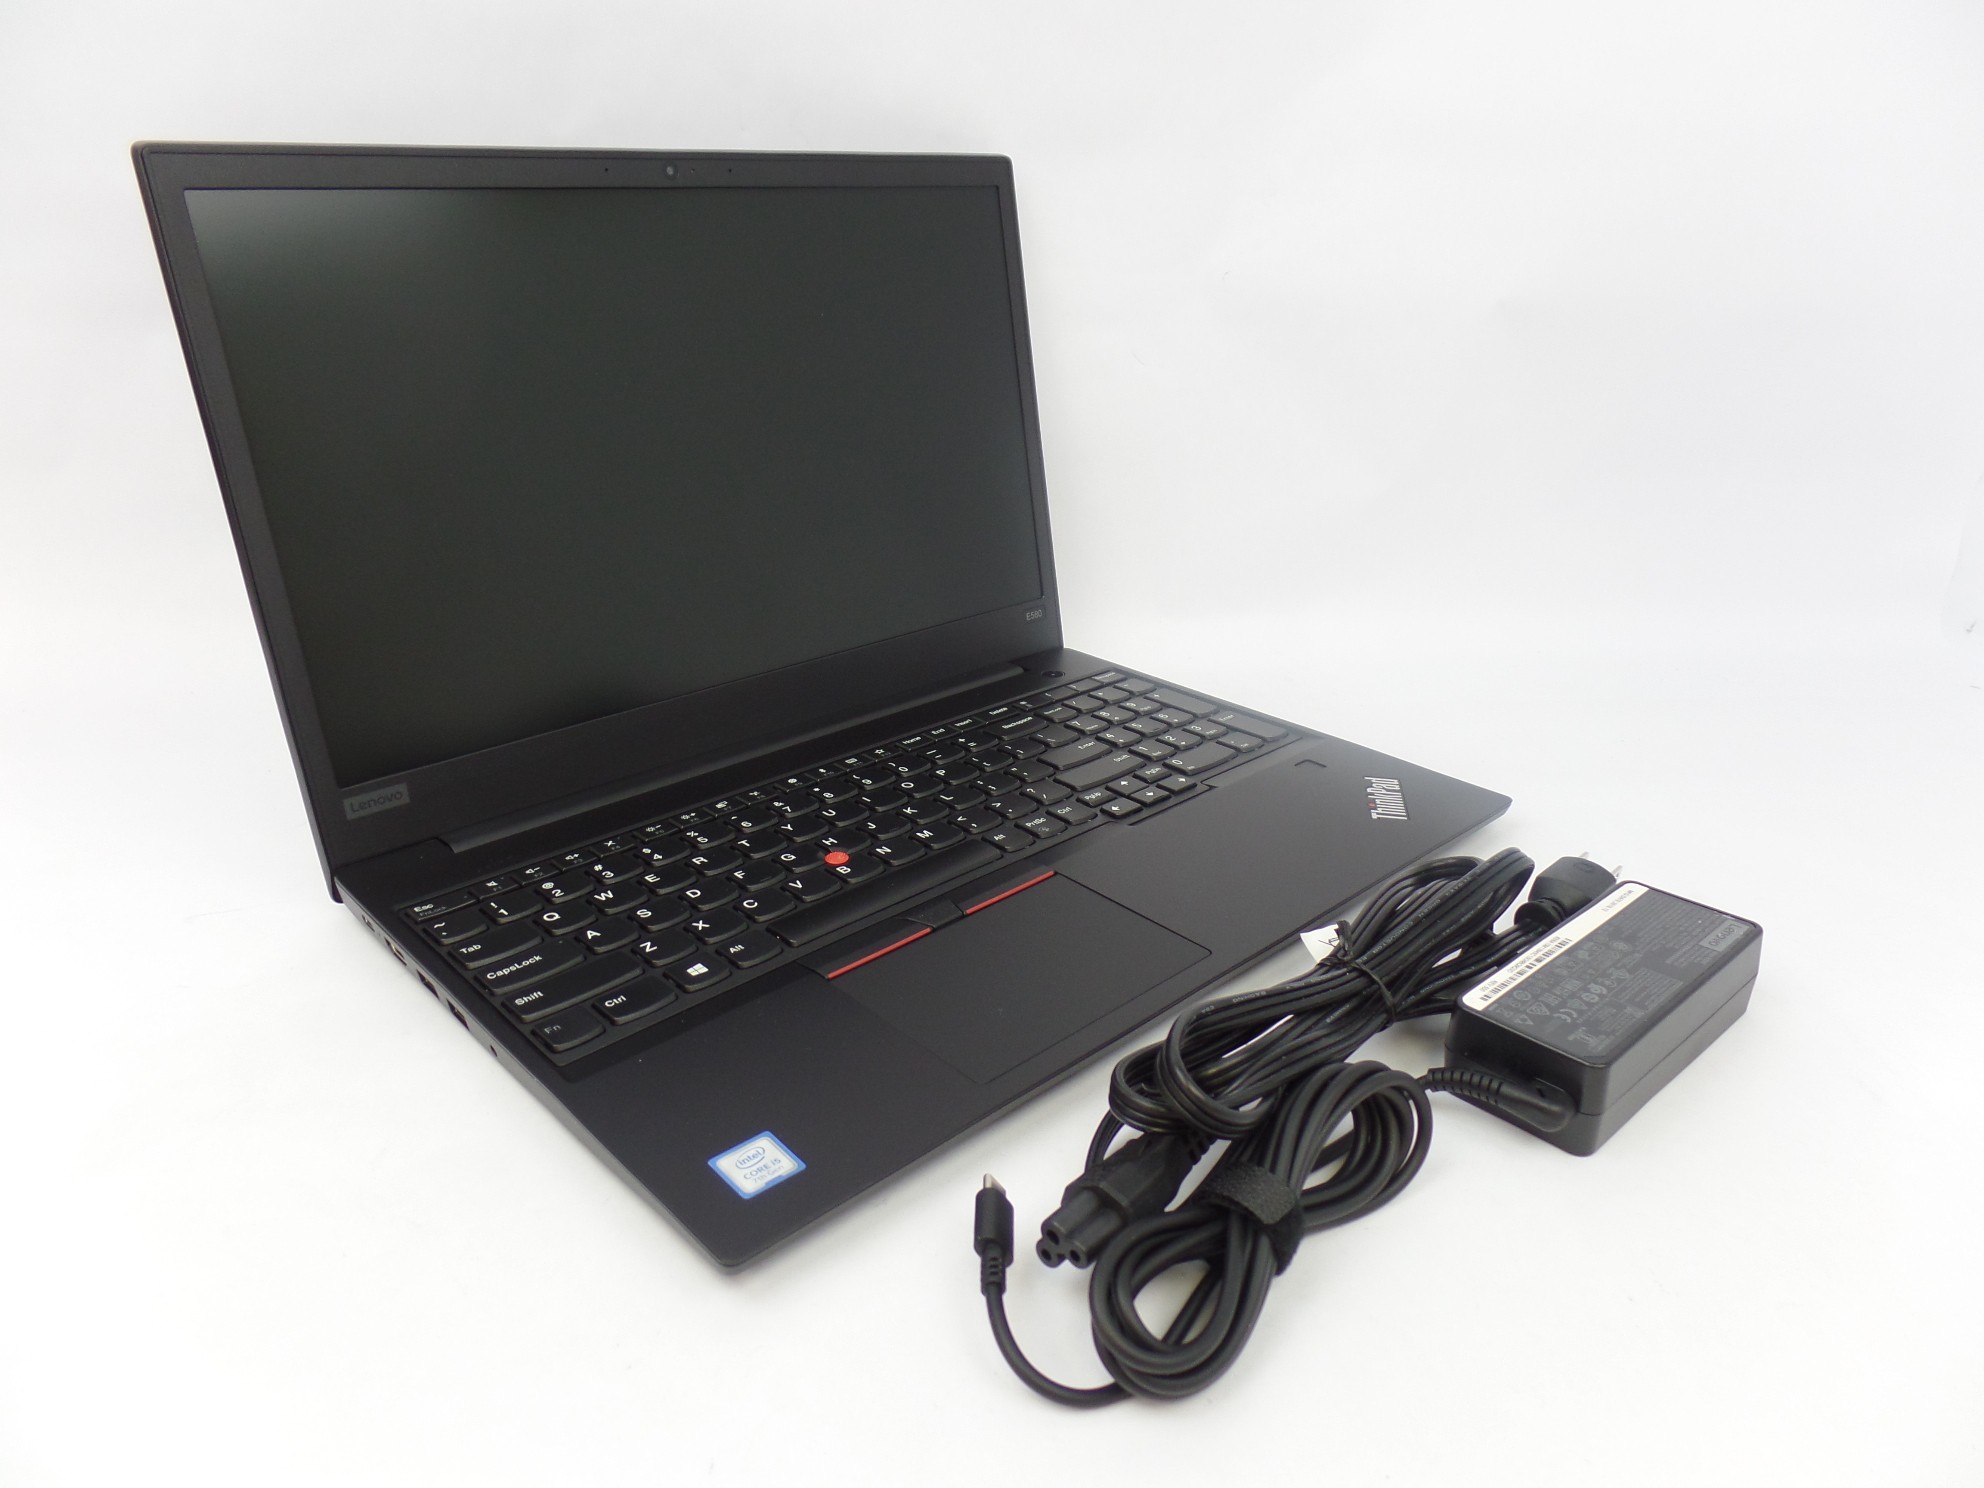 Lenovo ThinkPad E580 15.6" HD i5-7200U 2.5GHz 4GB 500GB HDD W10P Laptop 20KS U